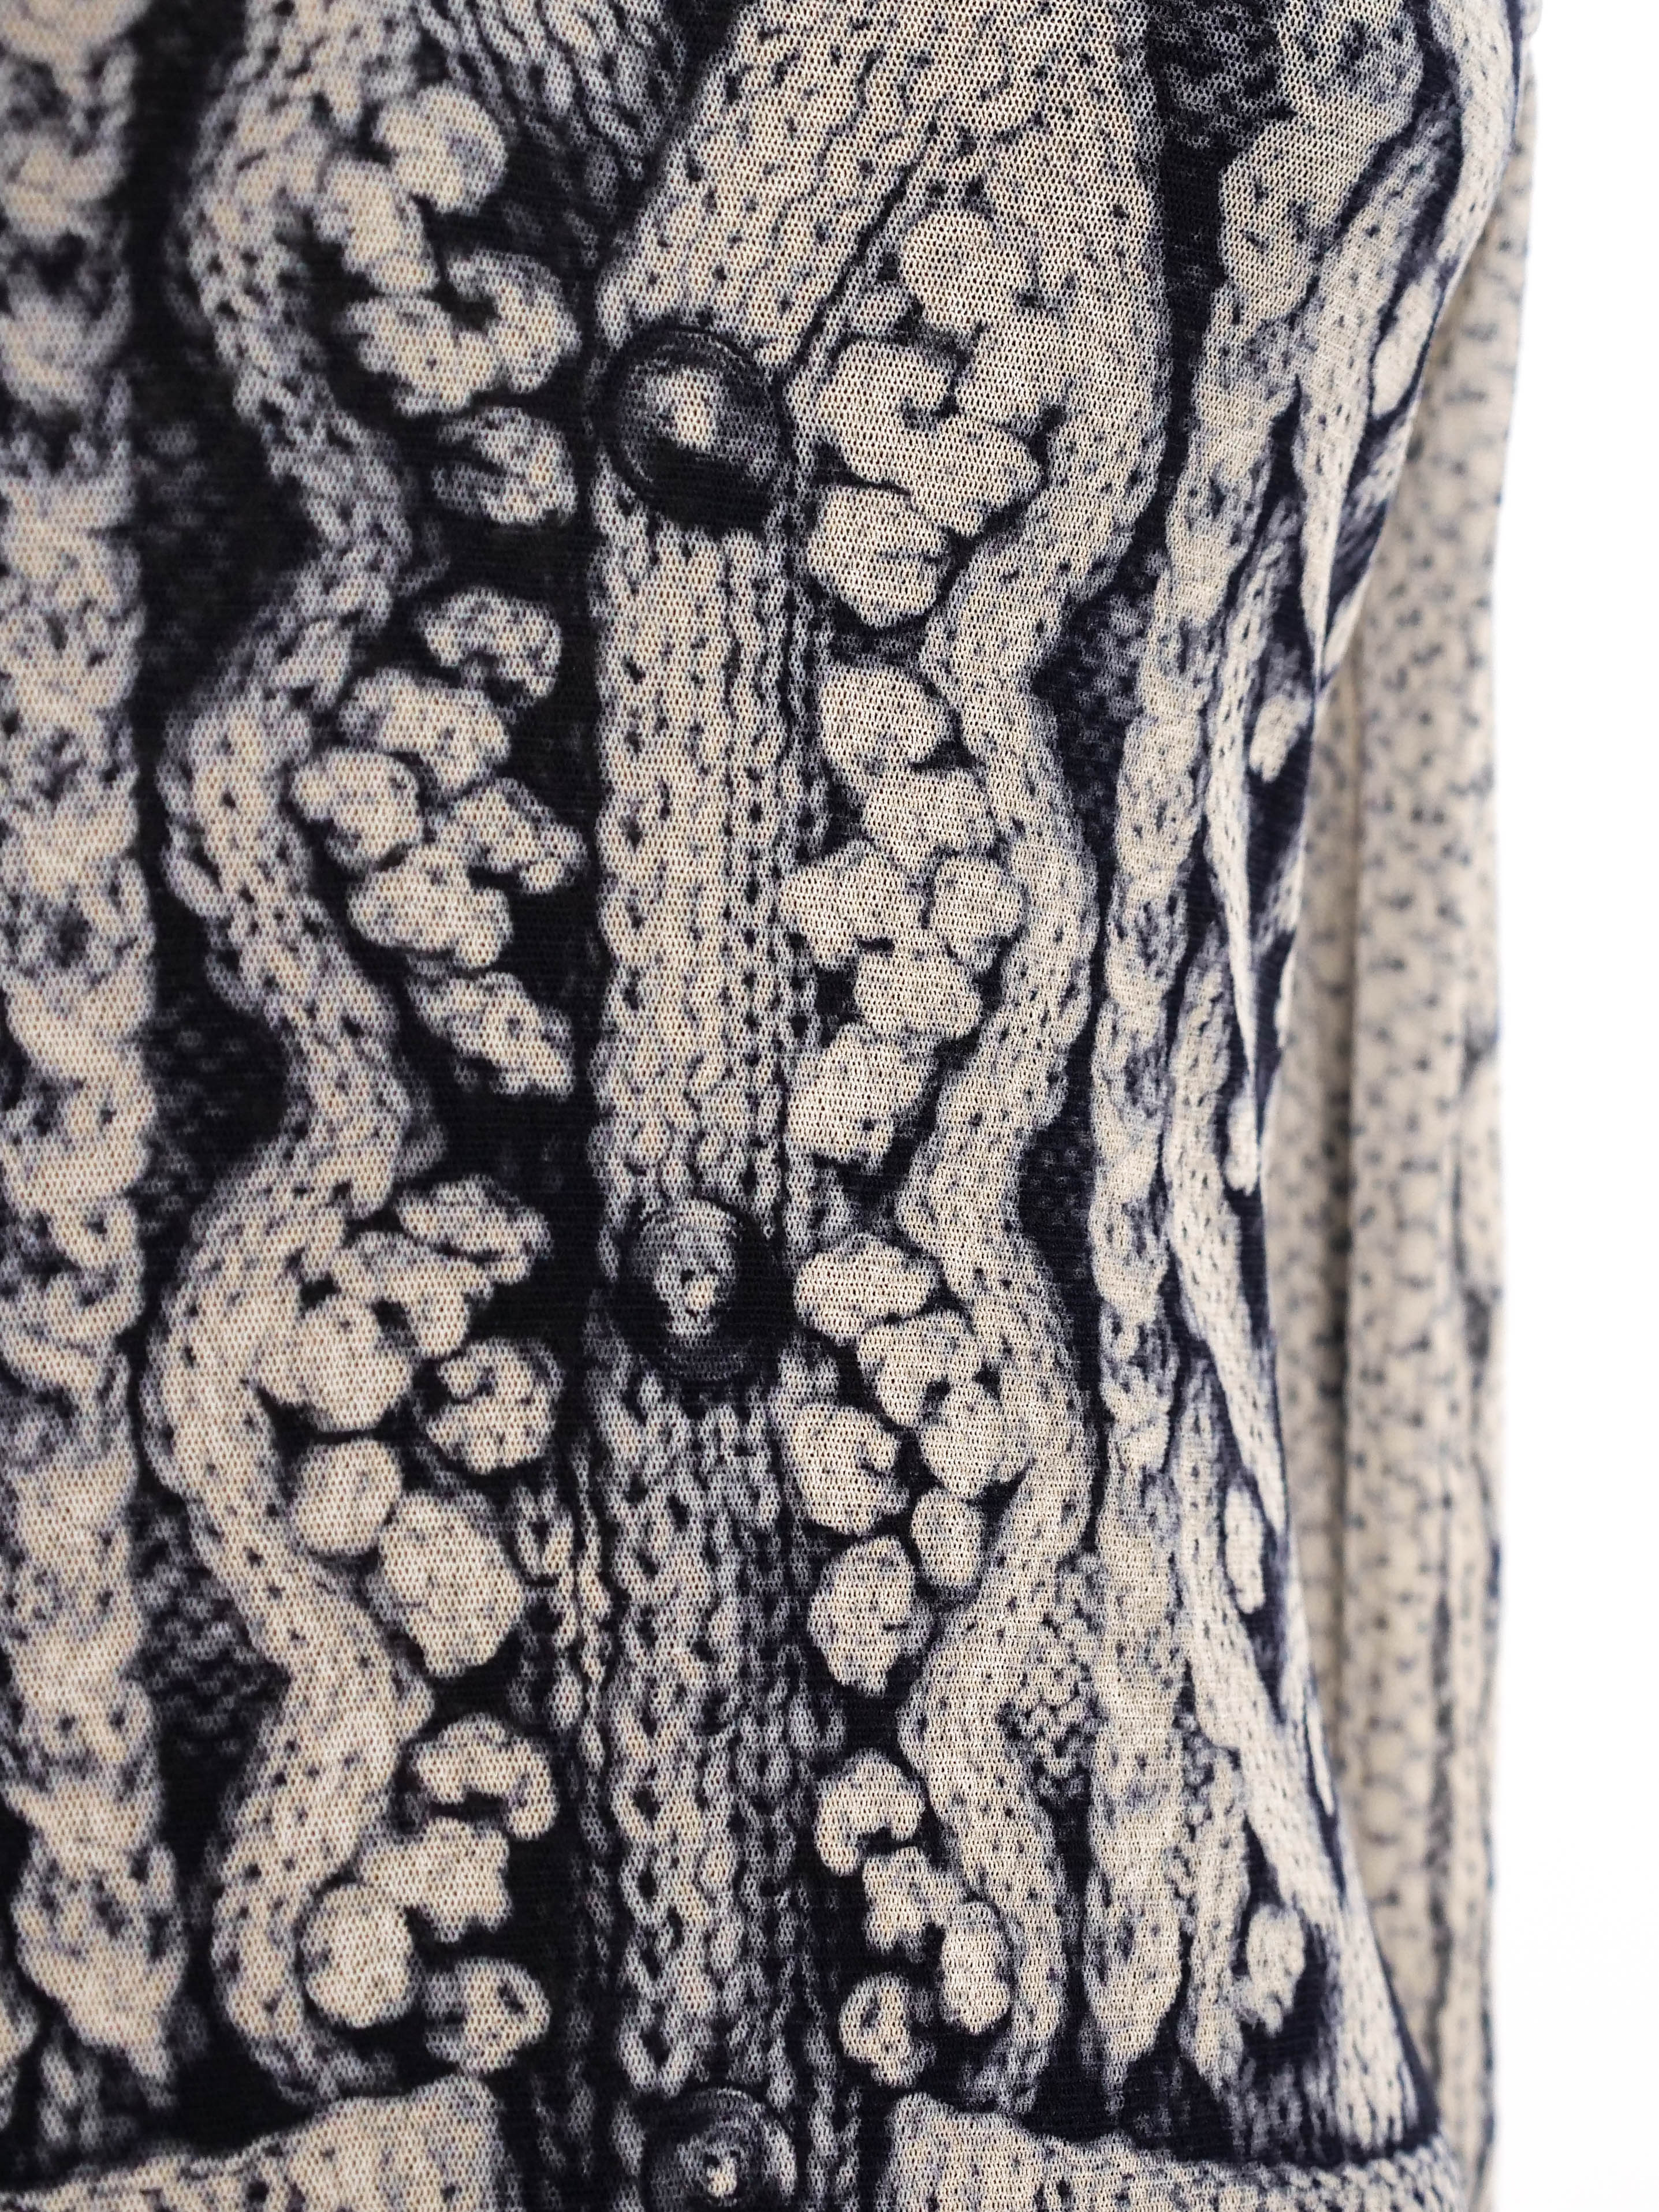 Jean Paul Gaultier Knit Sweater Printed Mesh Dress